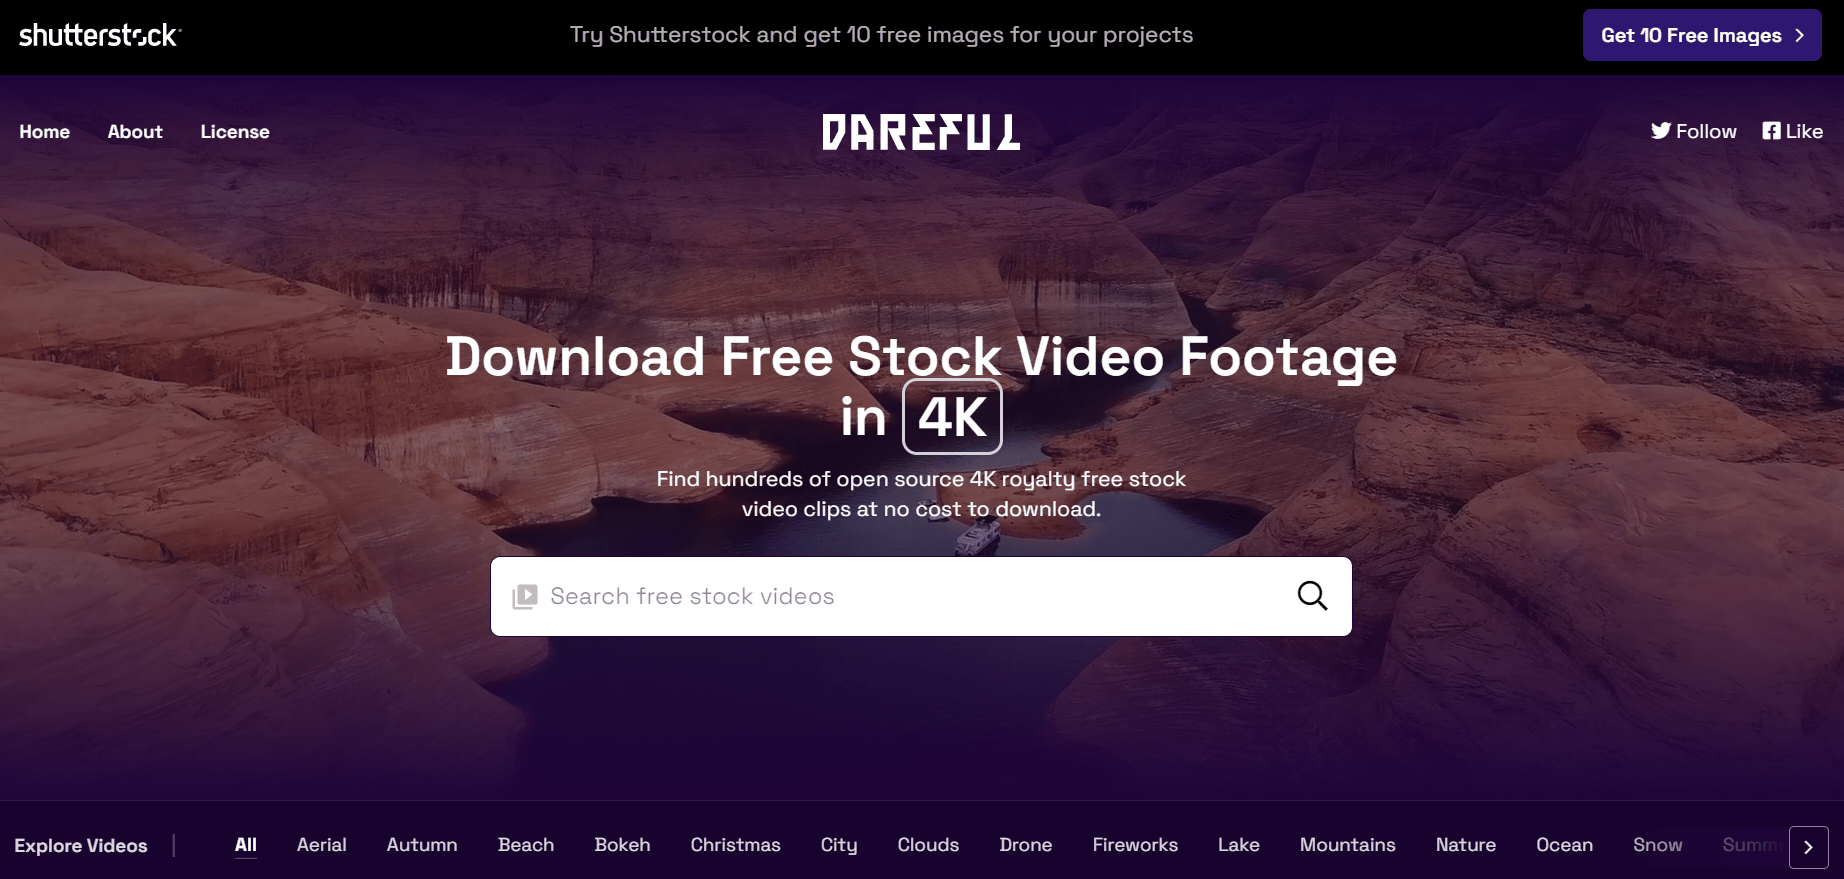 dareful stock footage